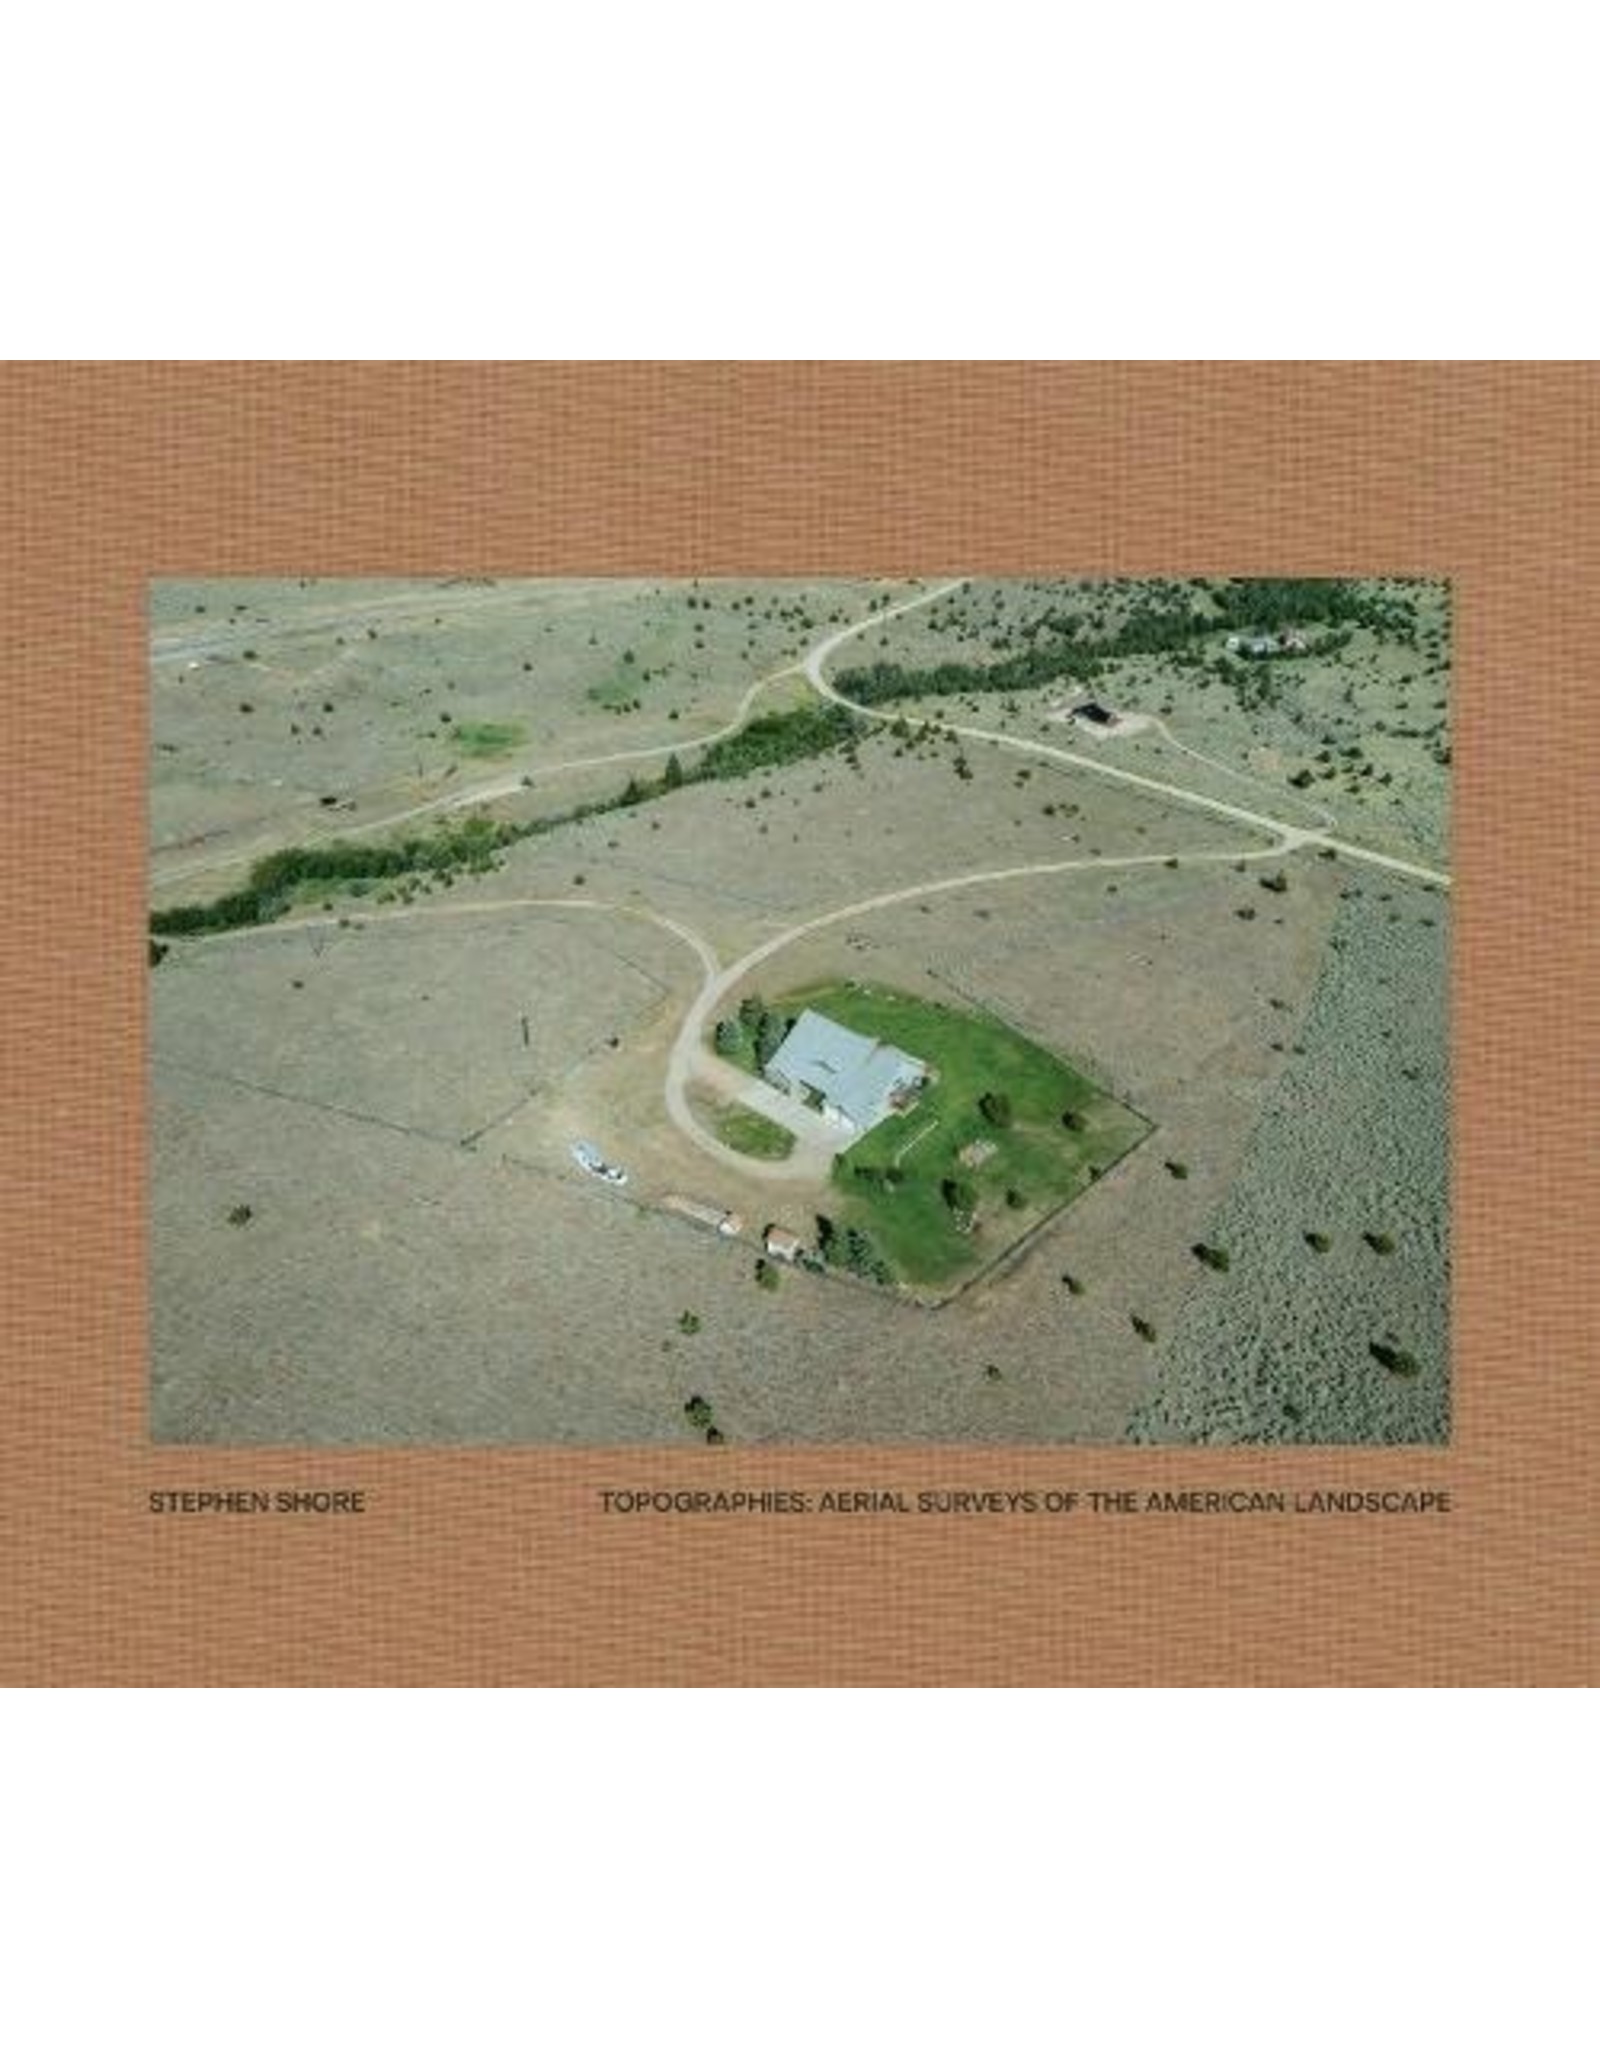 Stephen Shore: Topographies: Aerial Surveys of the American Landscape